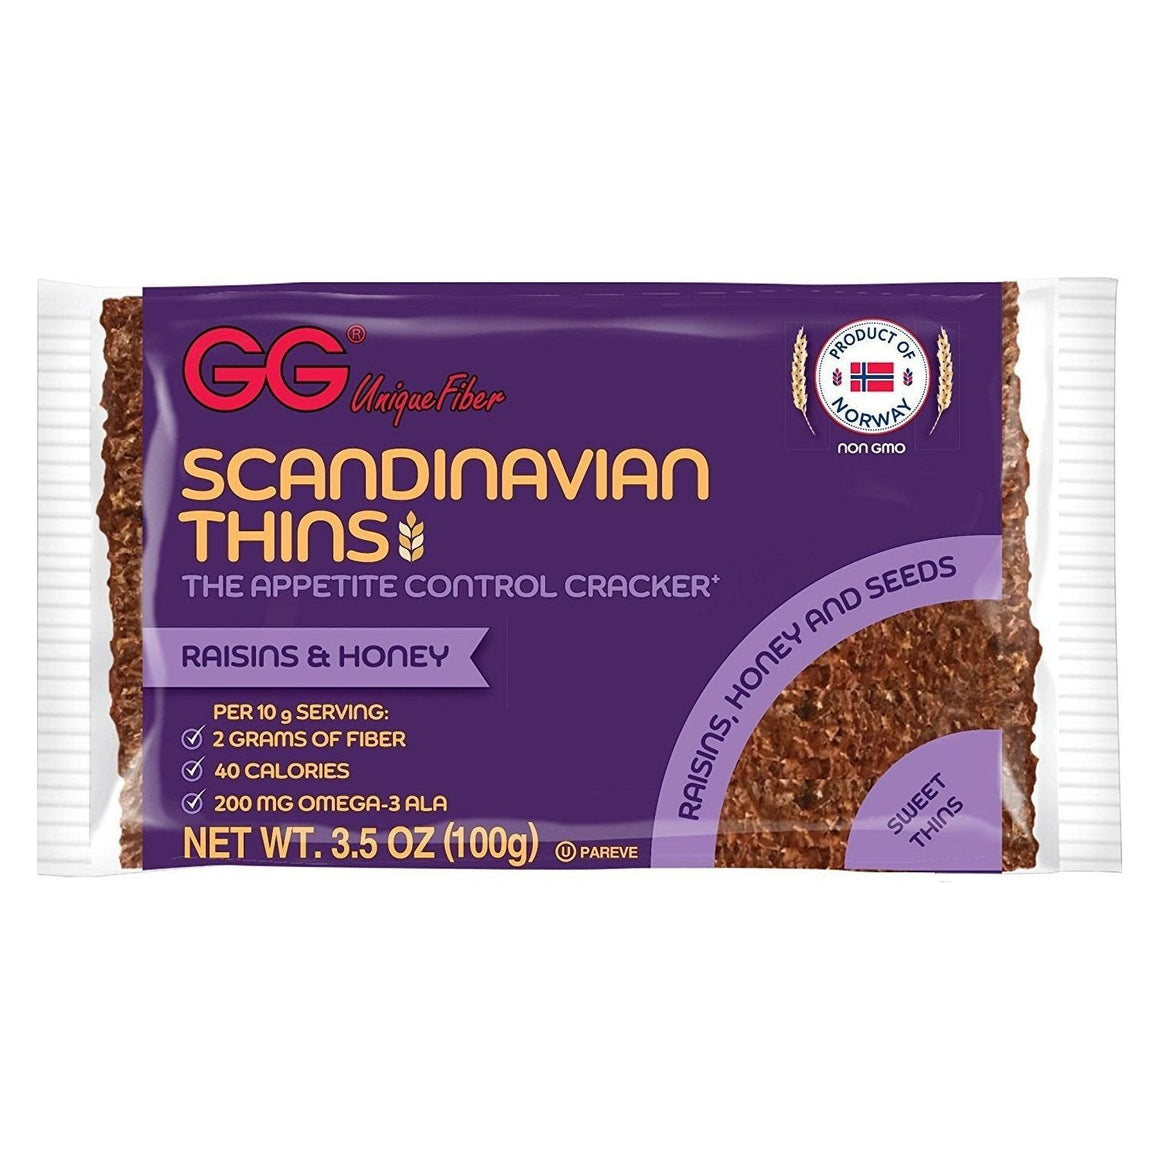 GG Scandinavian Fiber Crispbread - Raisins & Honey Thins - 3.5 oz